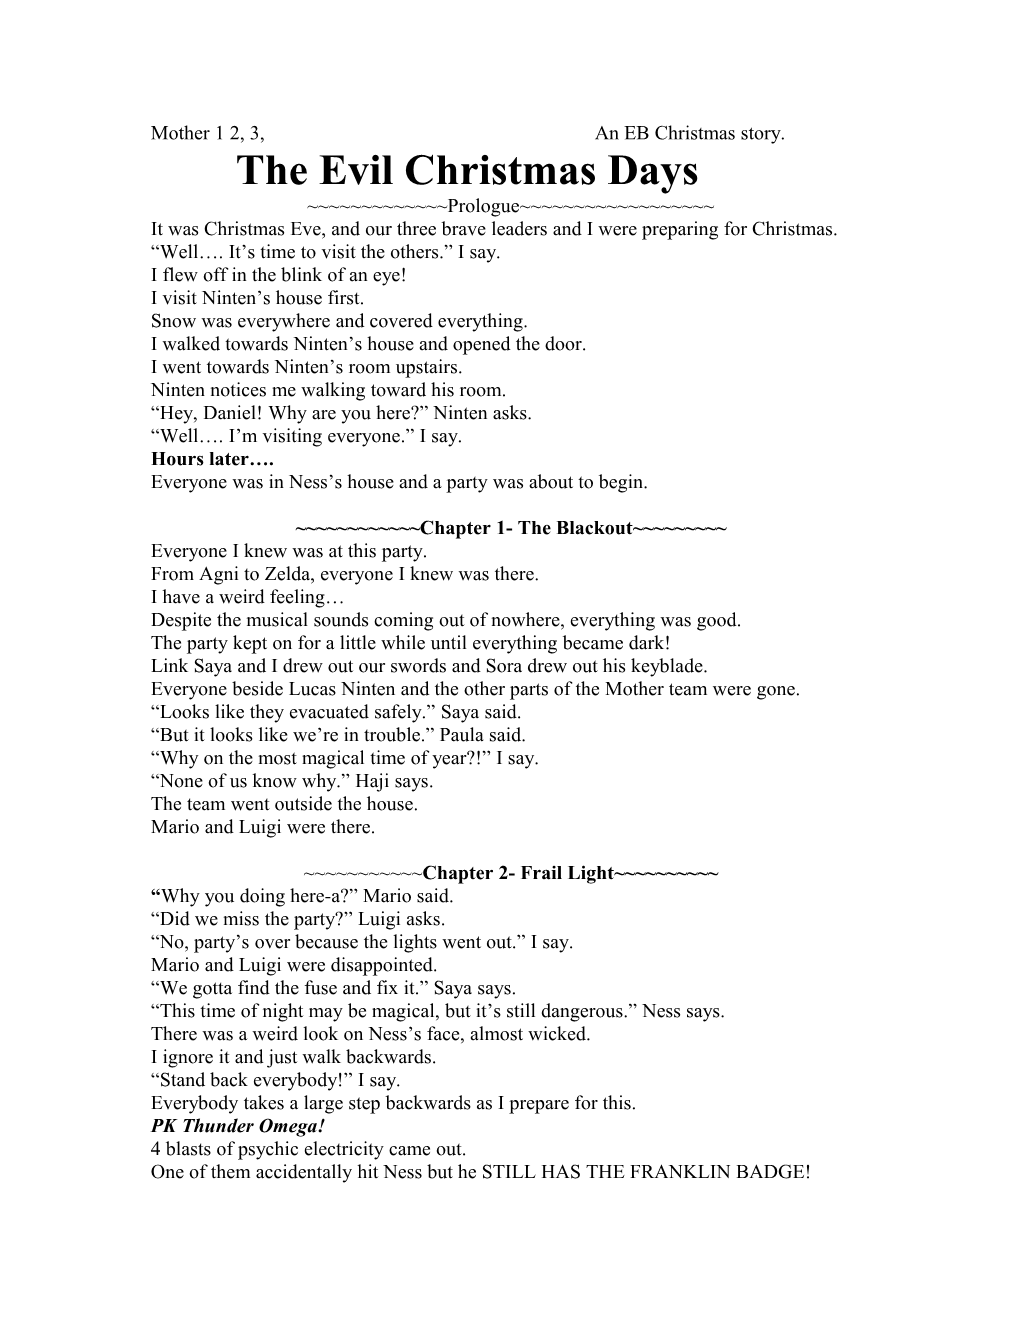 The Evil Christmas Days